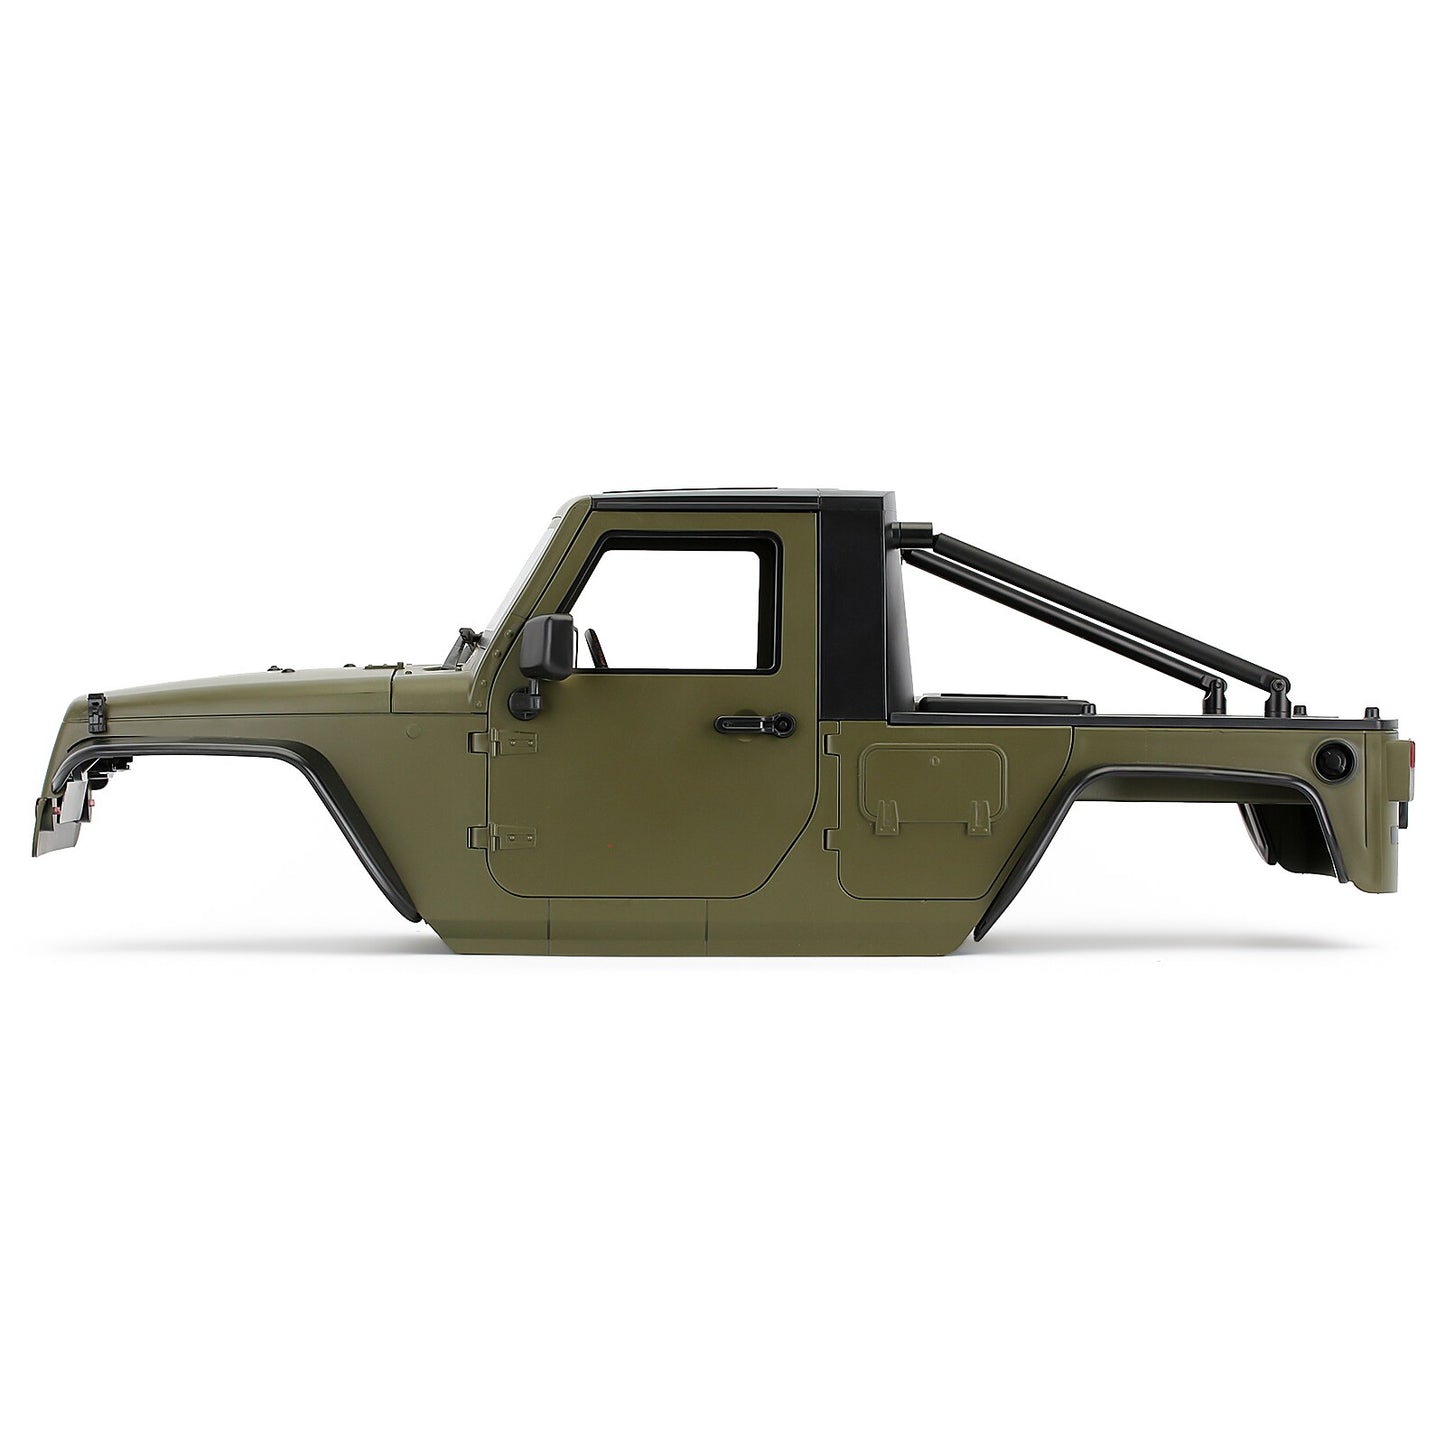 INJORA 12.3in 313mm Wheelbase Pickup Body Shell Unassembled Kit for 1/10 RC Crawler Car Axial SCX10 SCX10 II 90046 Jeep Wrangler